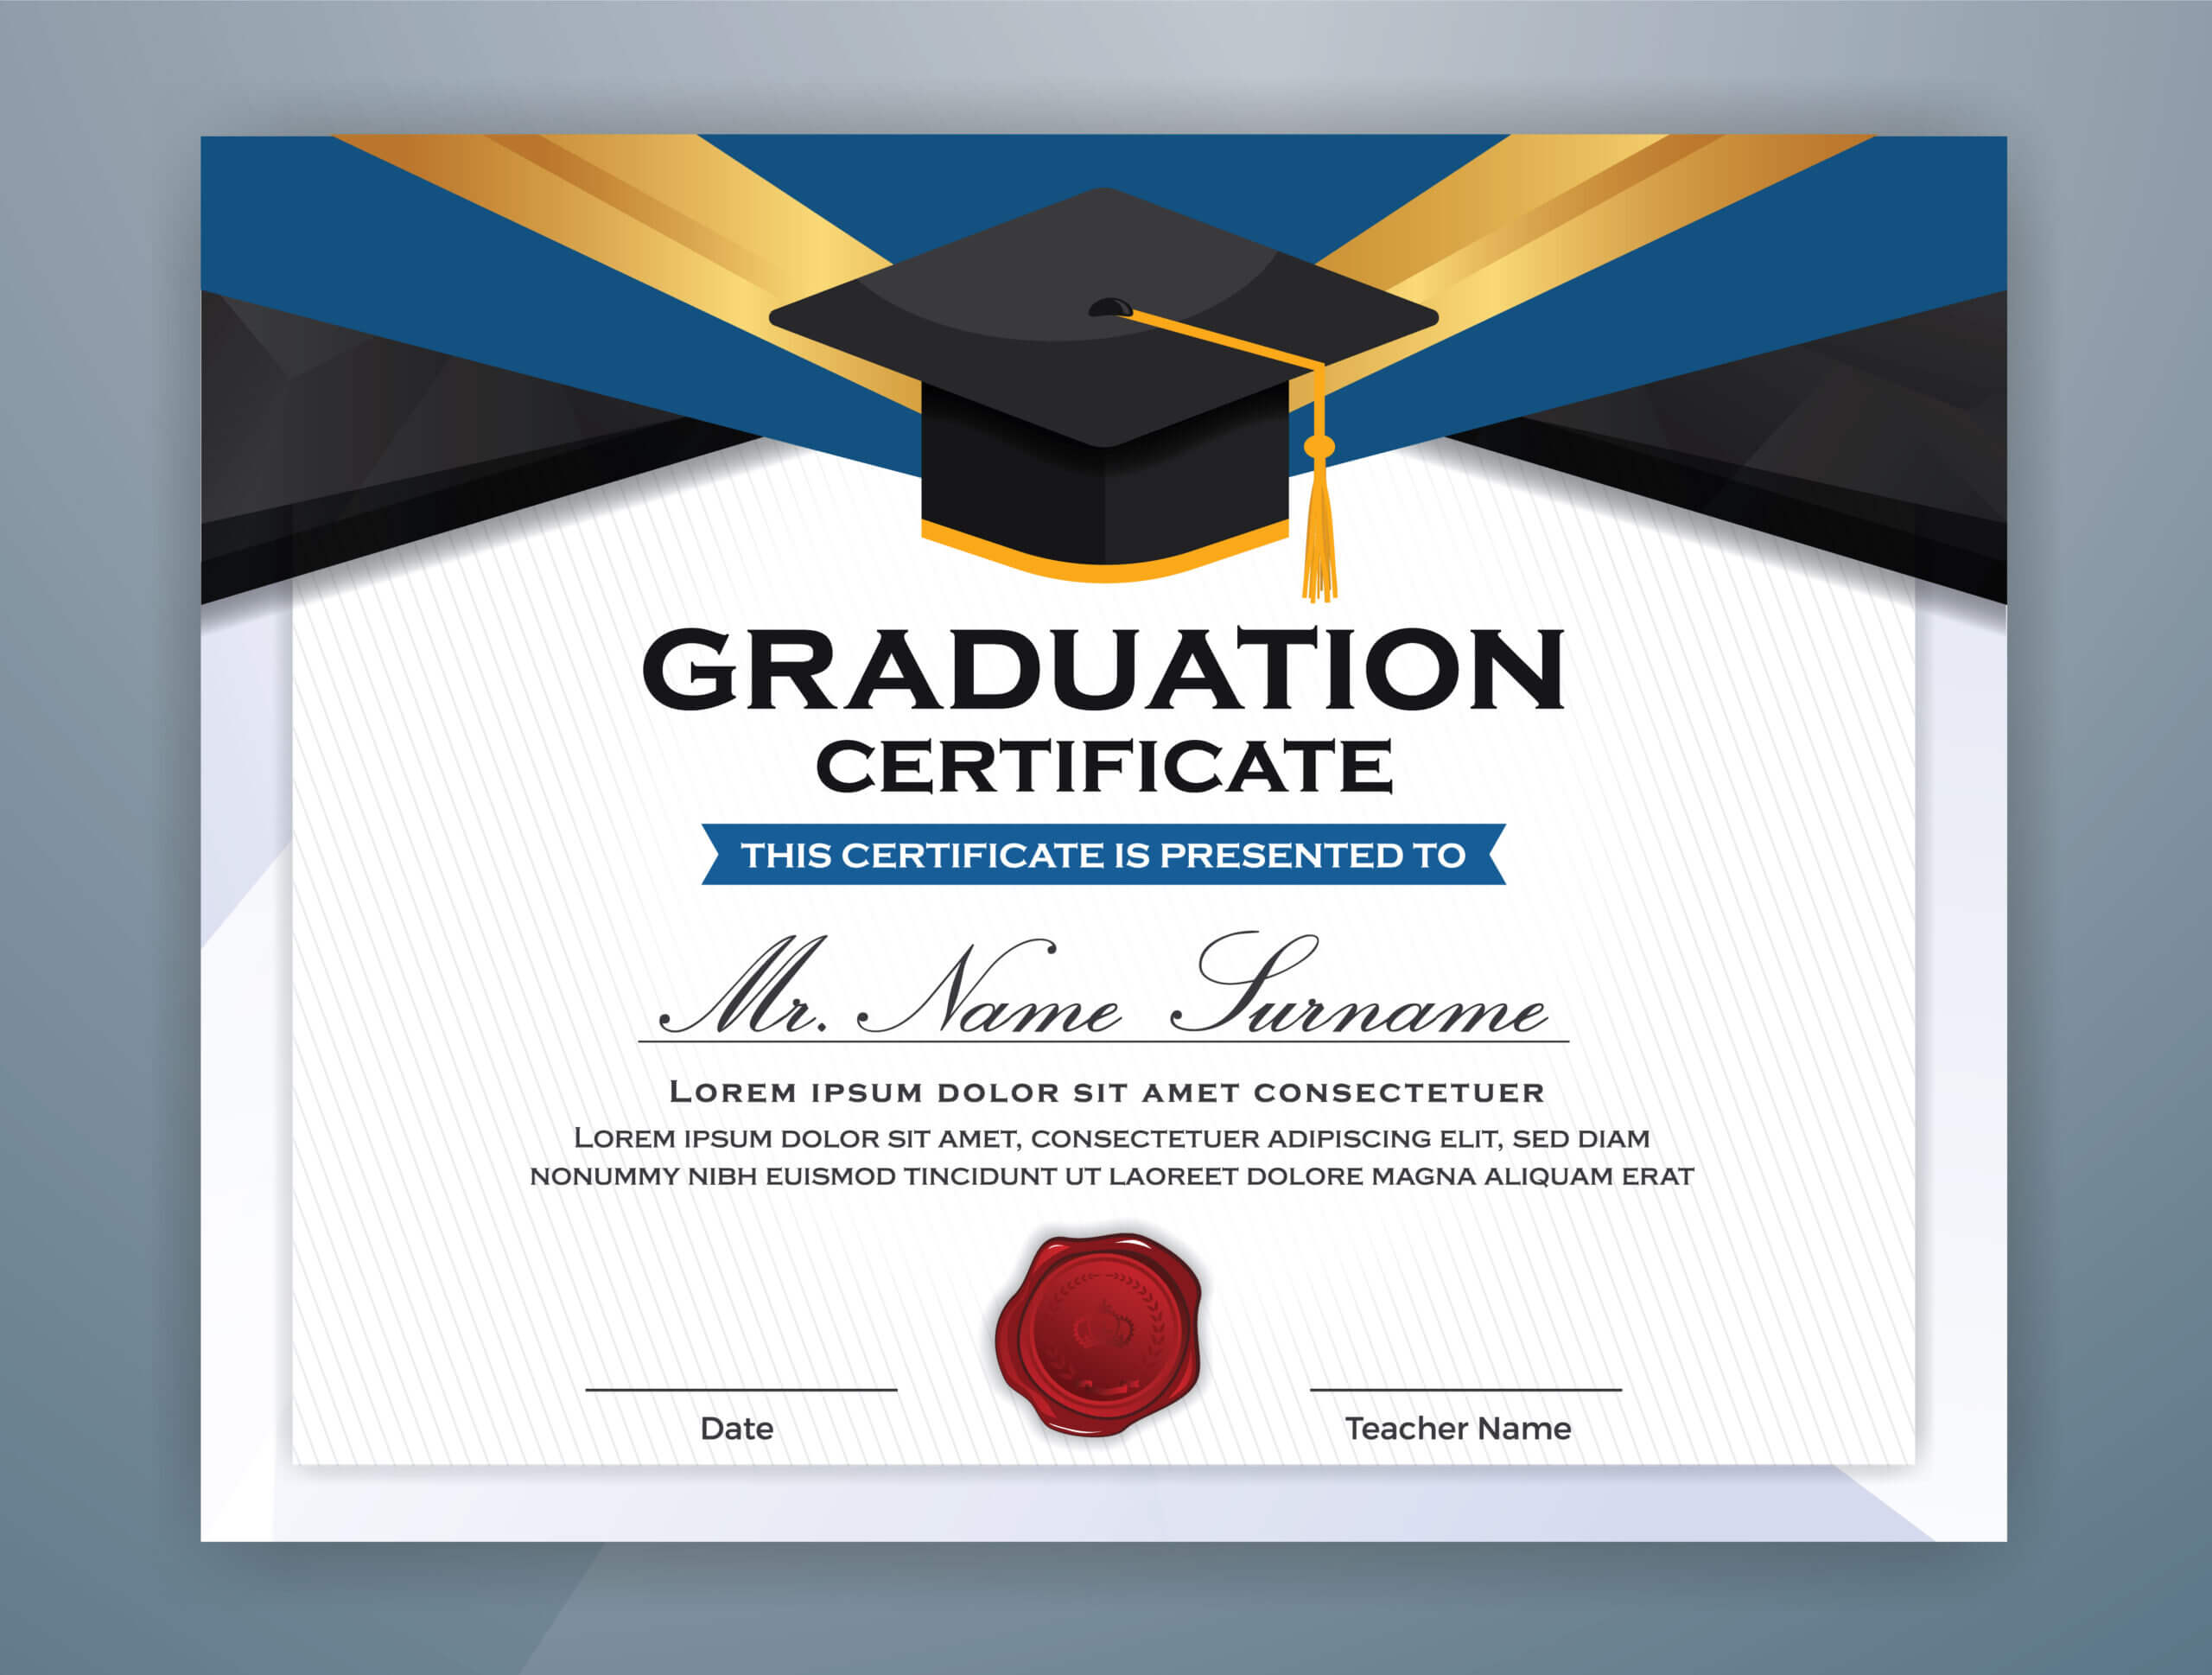 Graduation Certificate Free Vector Art - (4,527 Free Downloads) Within College Graduation Certificate Template